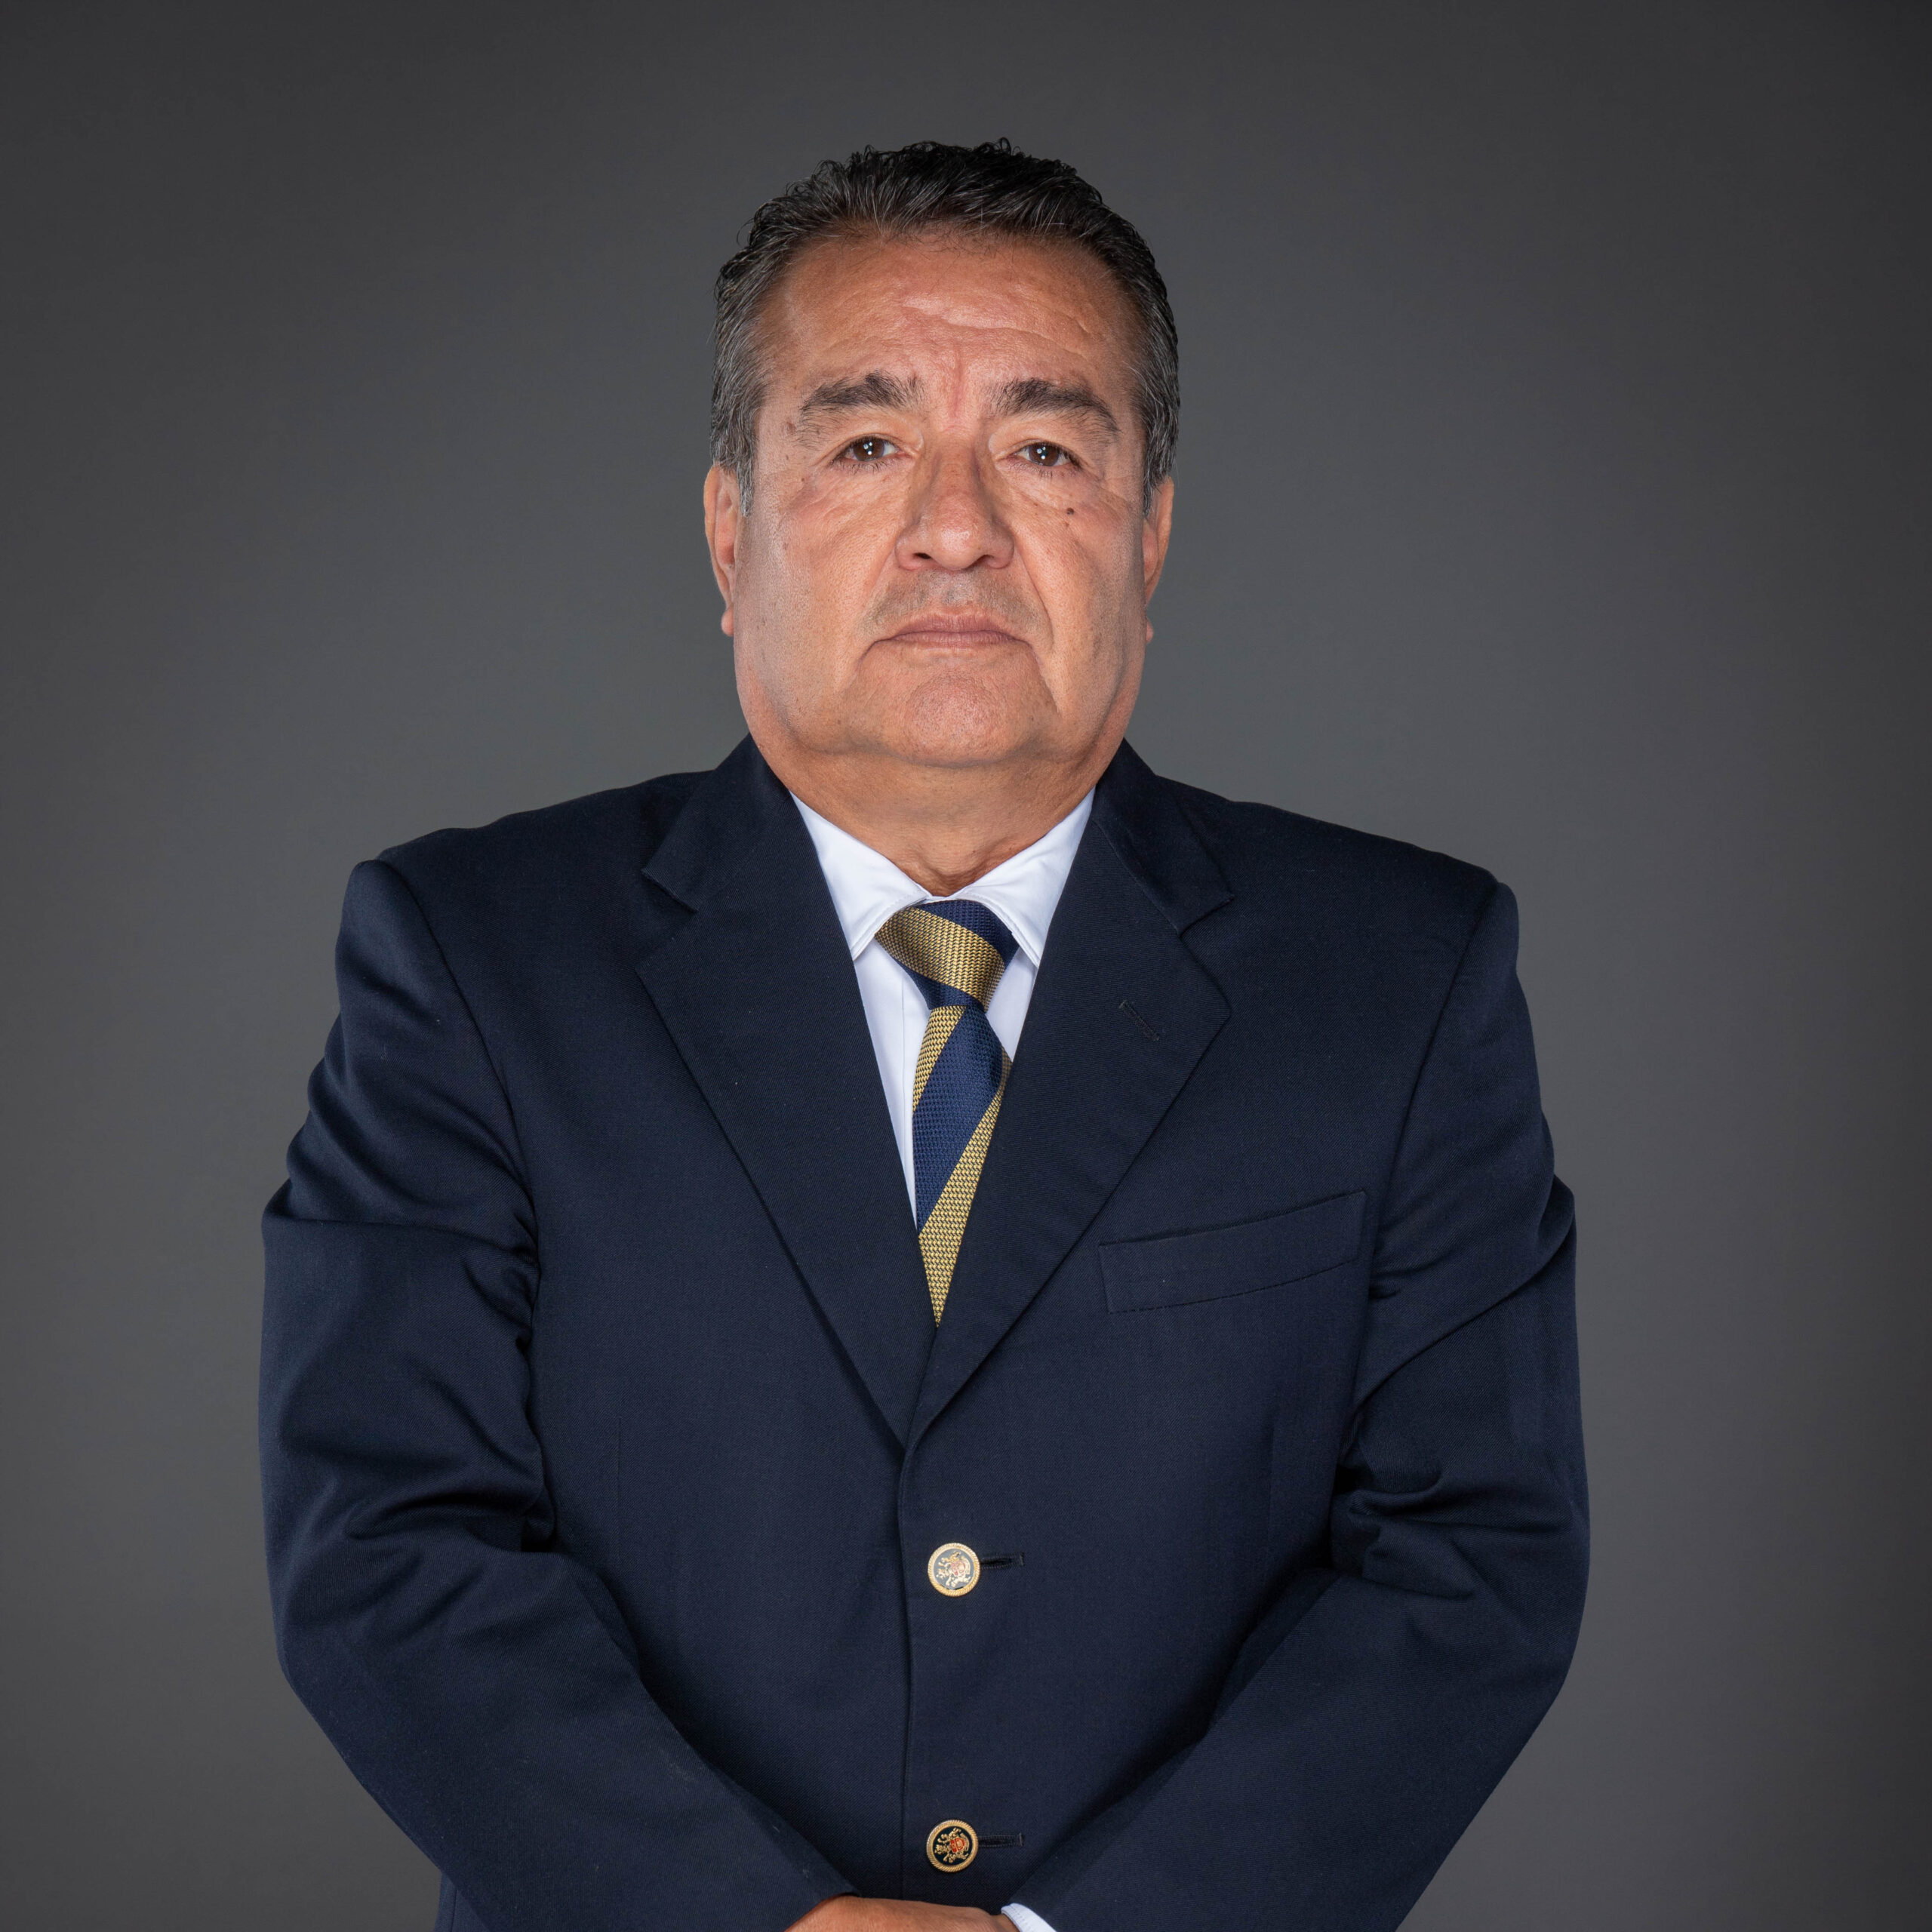 Edgar Mendoza Haro